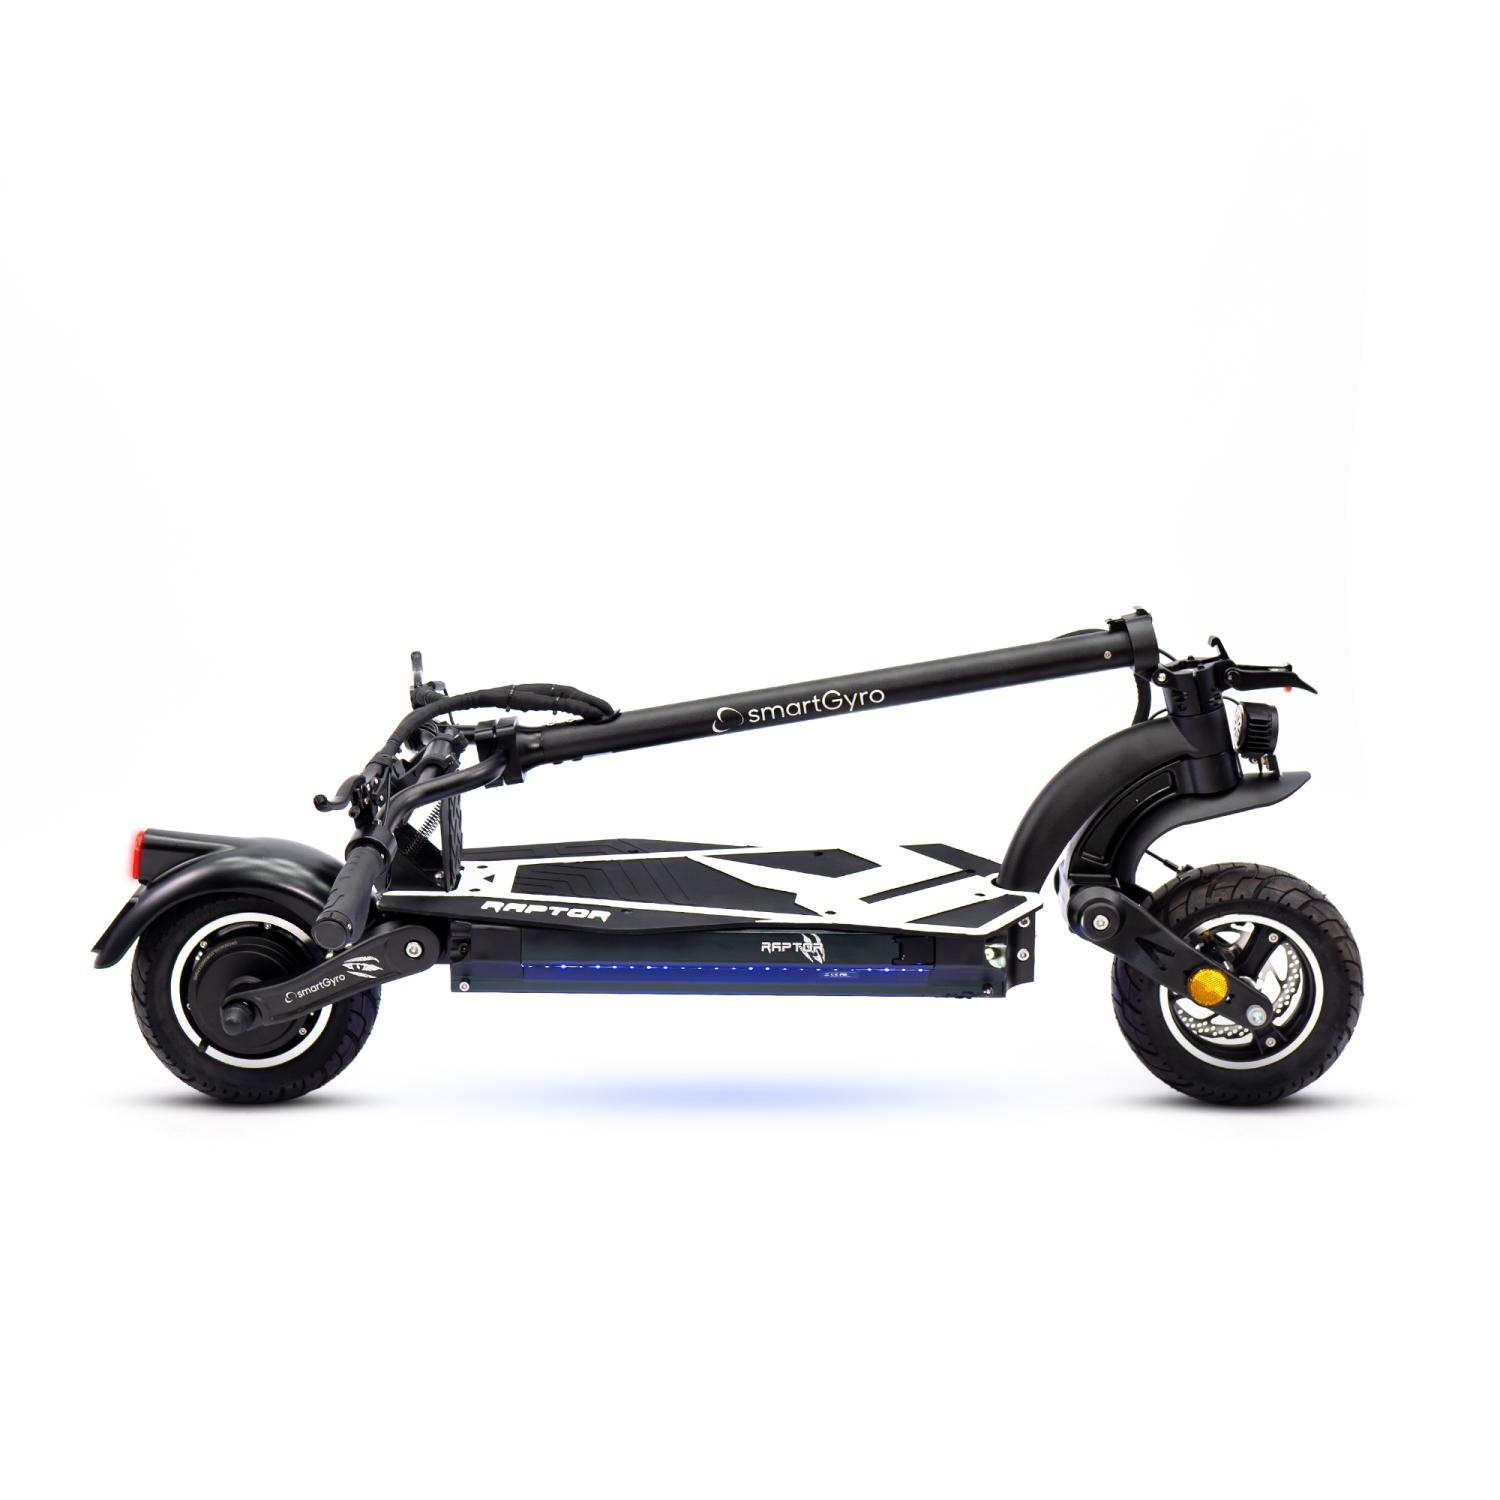 Patinete eléctrico smartgyro raptor certificado - motor 1000w - ruedas 10'  - 25km/h /autonomía 70km - negro